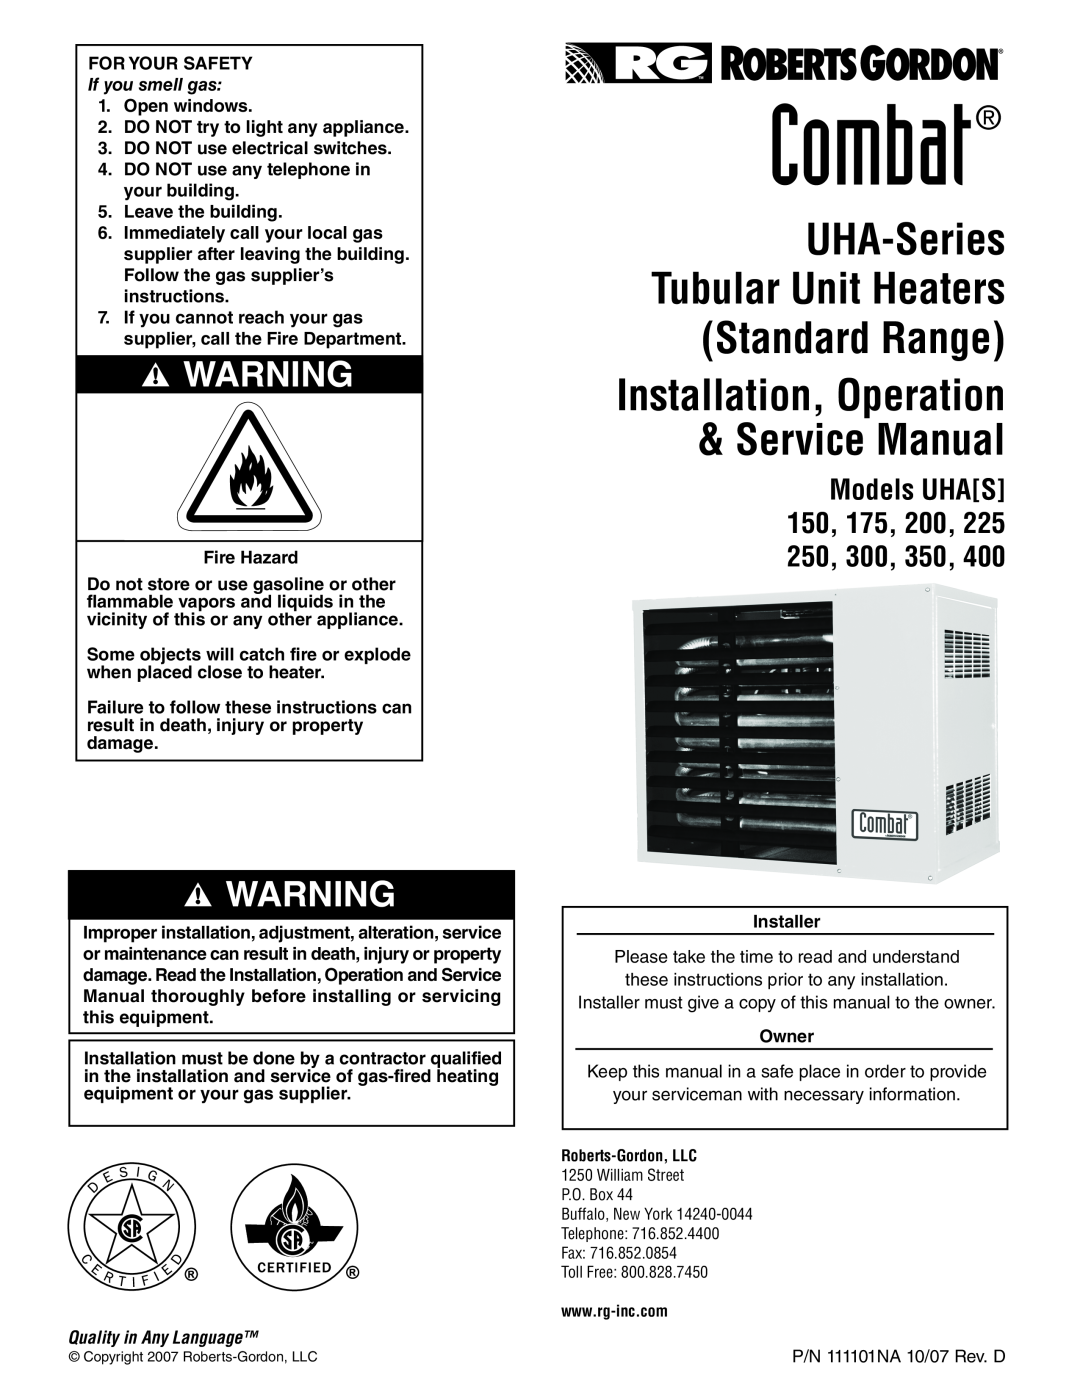 Roberts Gorden 350, 200, 150, 400 service manual Combat, UHA-Series Tubular Unit Heaters Standard Range, If you smell gas 